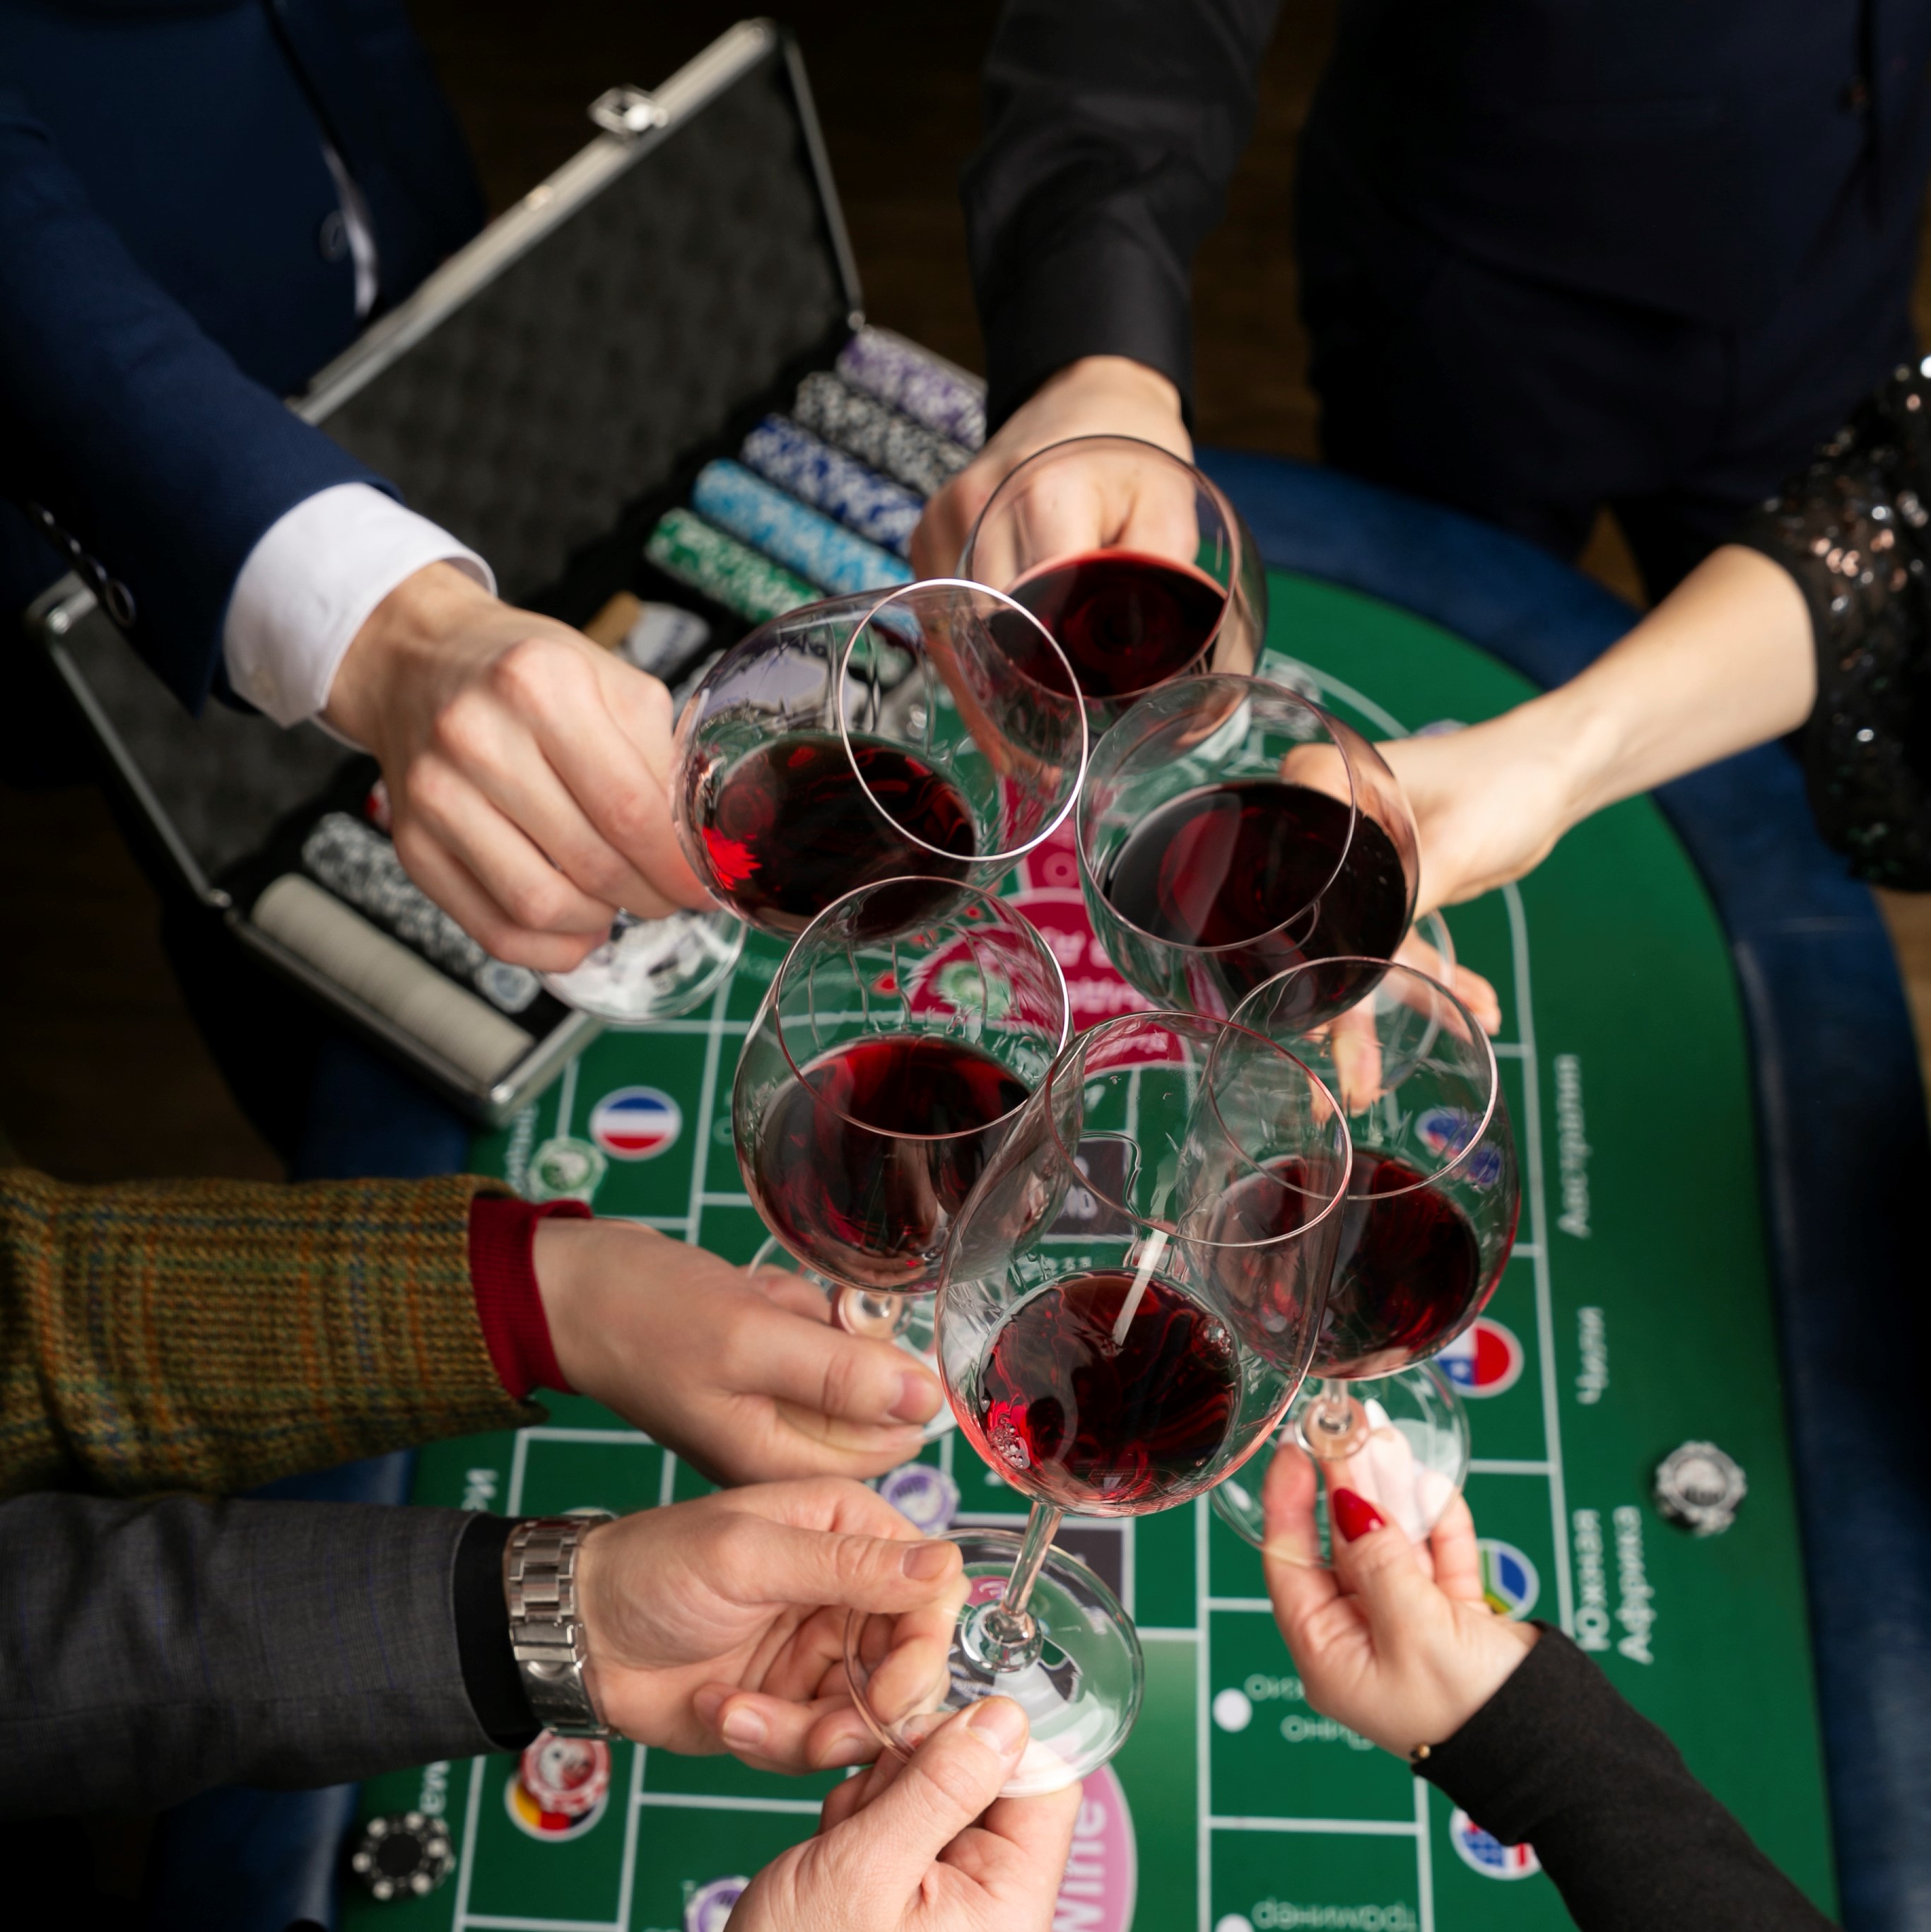 Casino wine мостбет скачать приложение на андроид russian